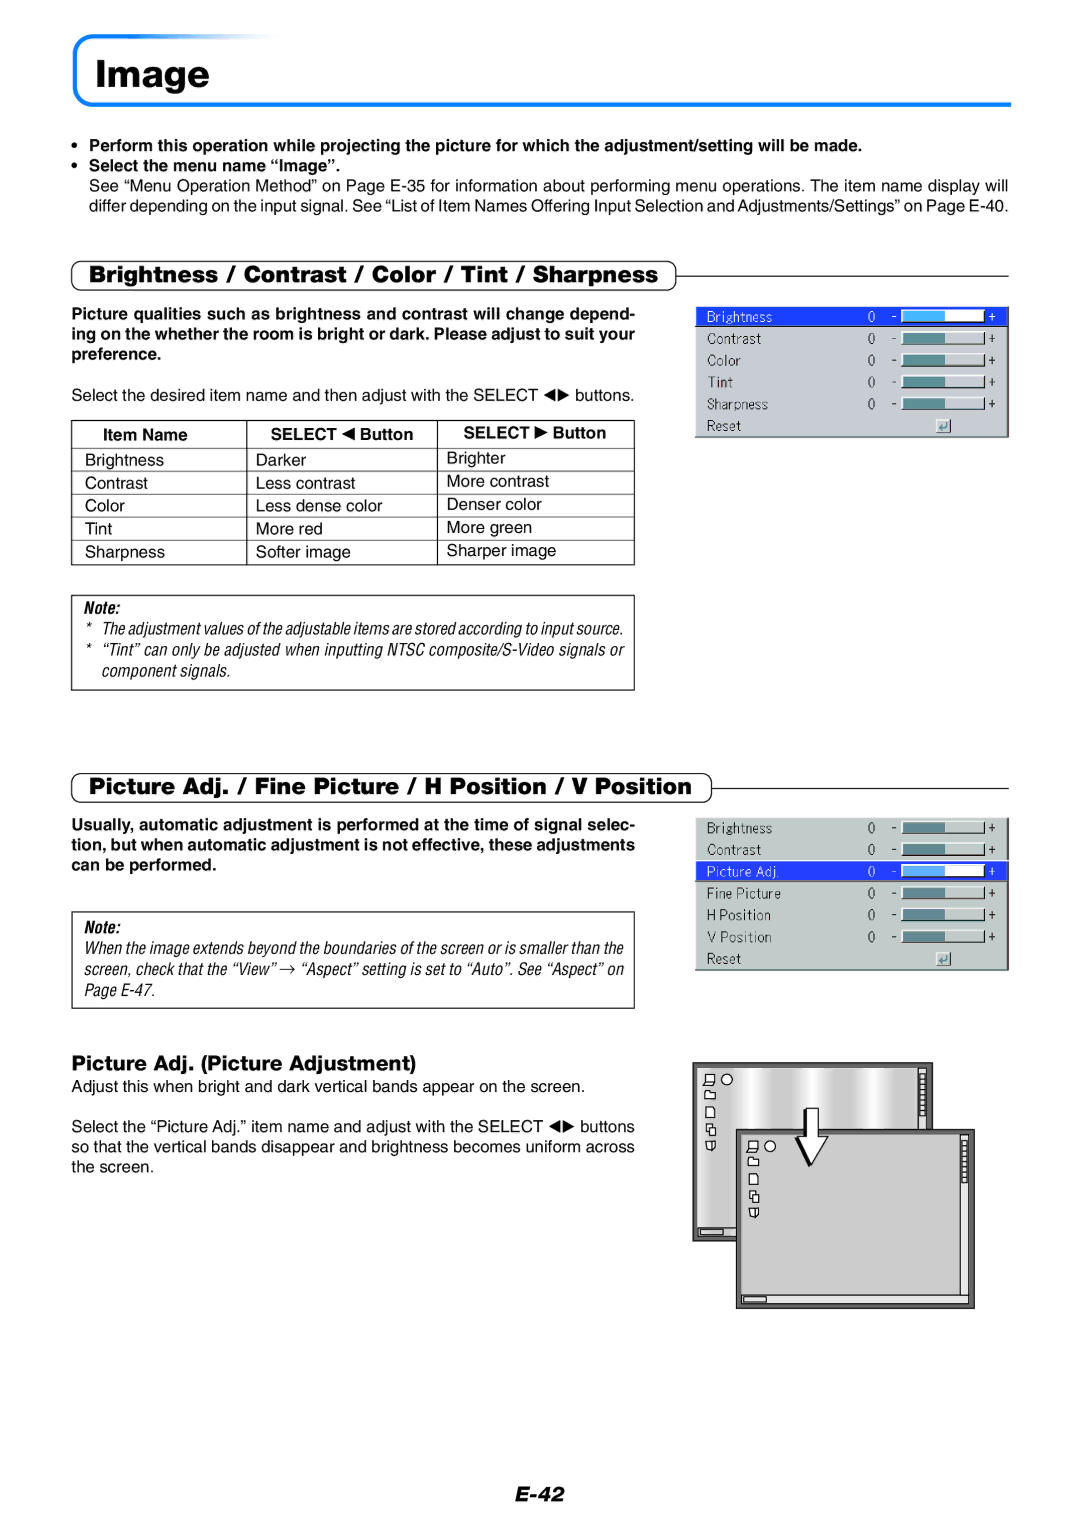 PLUS Vision U4-237 user manual Image, Brightness / Contrast / Color / Tint / Sharpness, Picture Adj. Picture Adjustment 